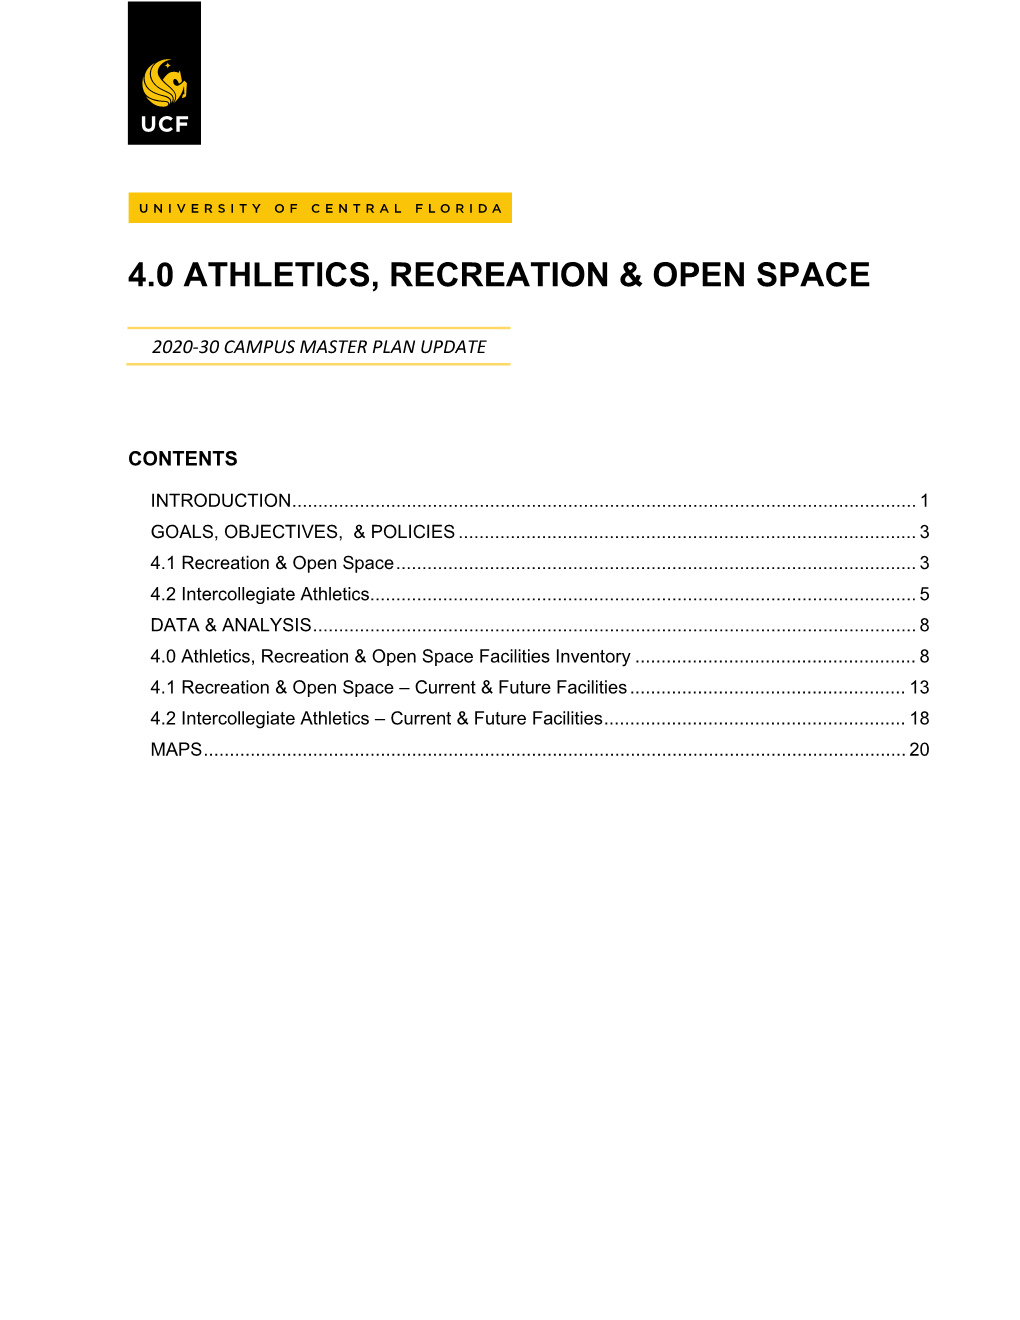 4.0 Athletics, Recreation & Open Space